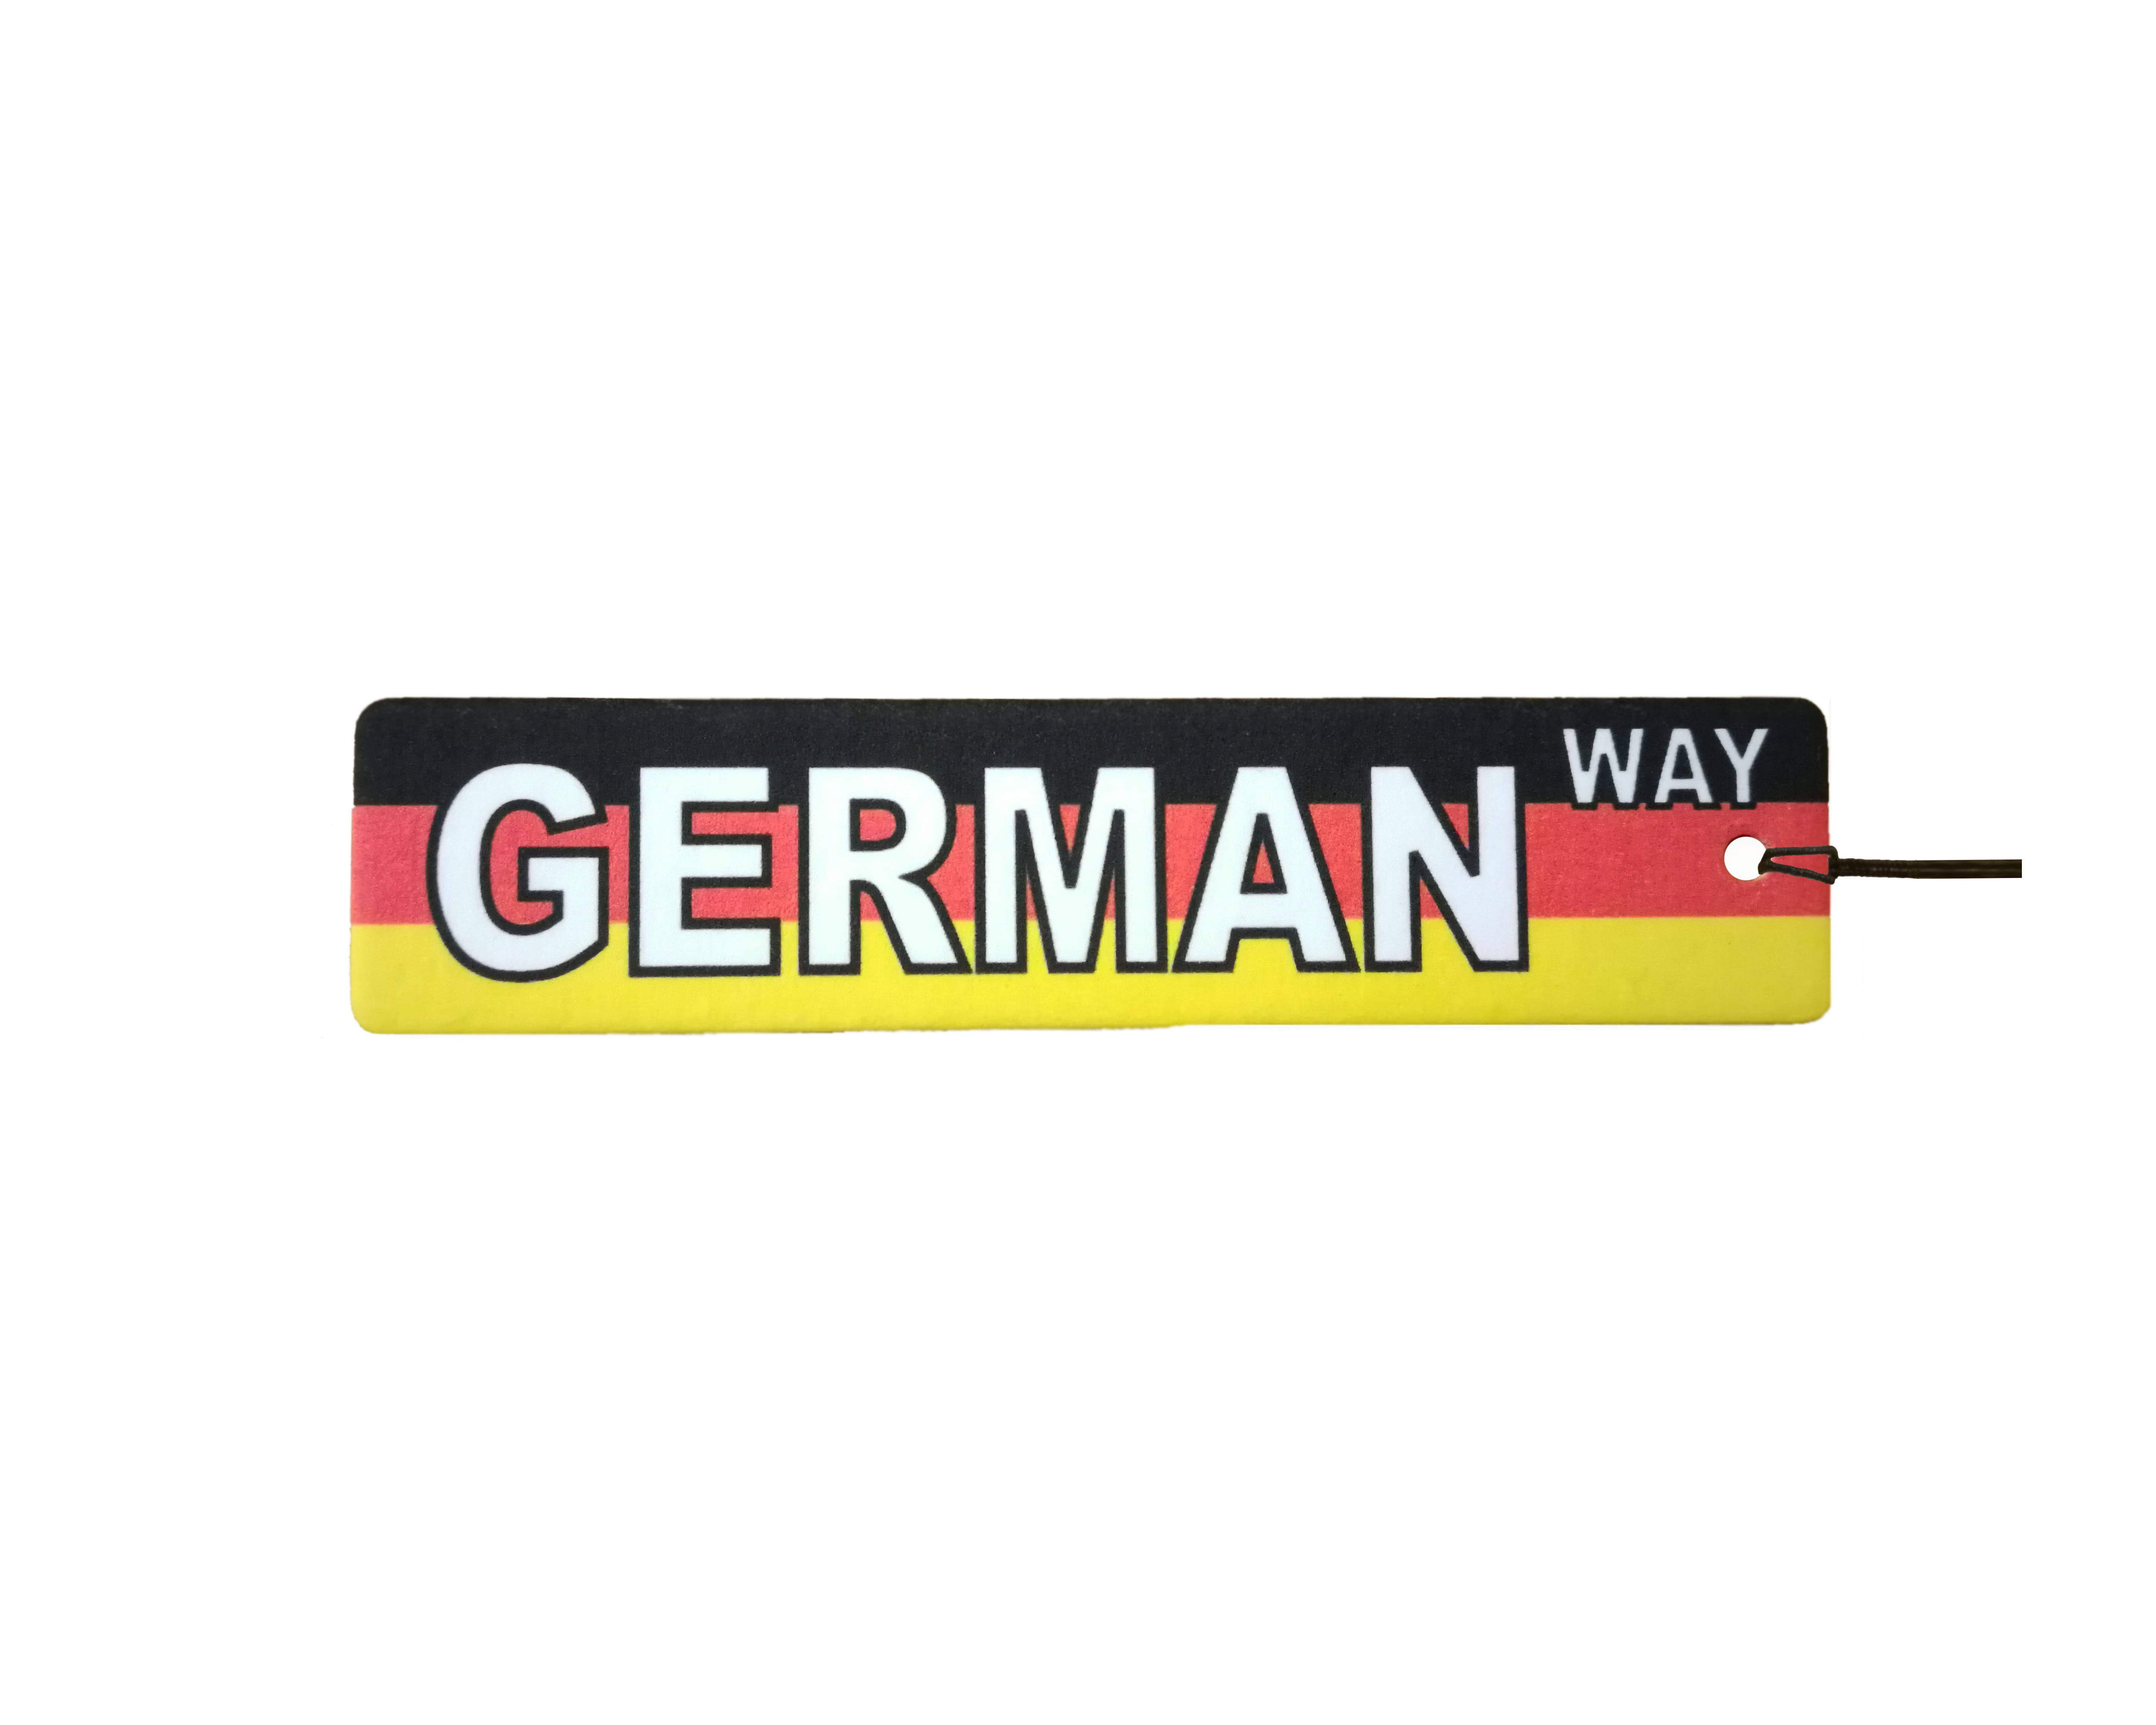 German Way Street Sign